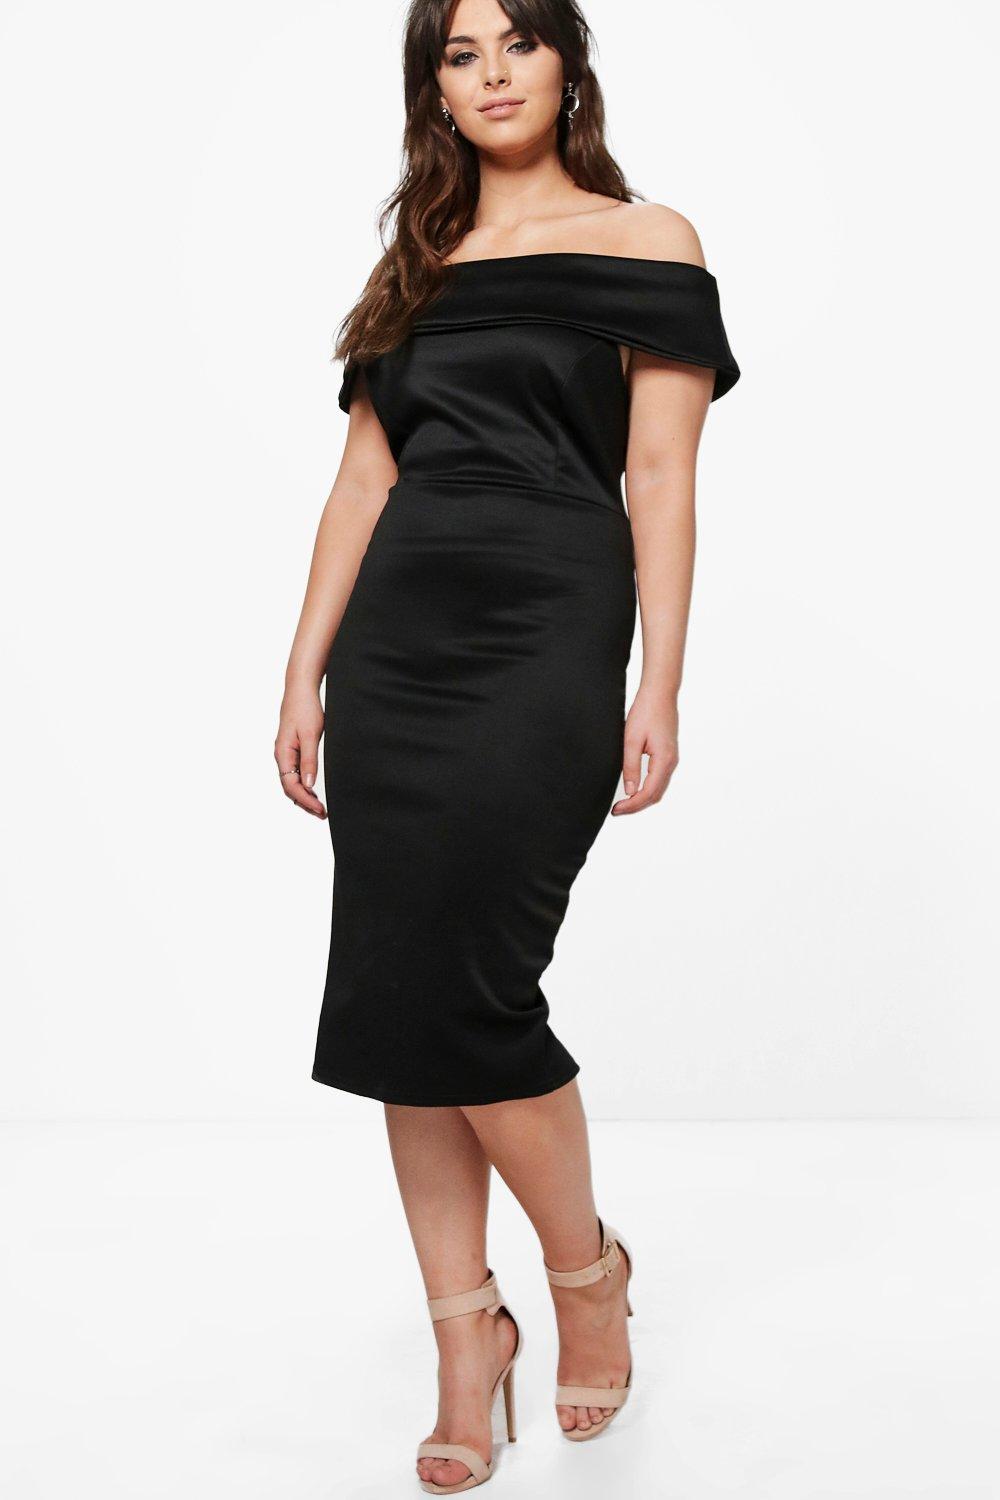 Boohoo Womens Plus Size Millie Double Layer Midi Dress | eBay